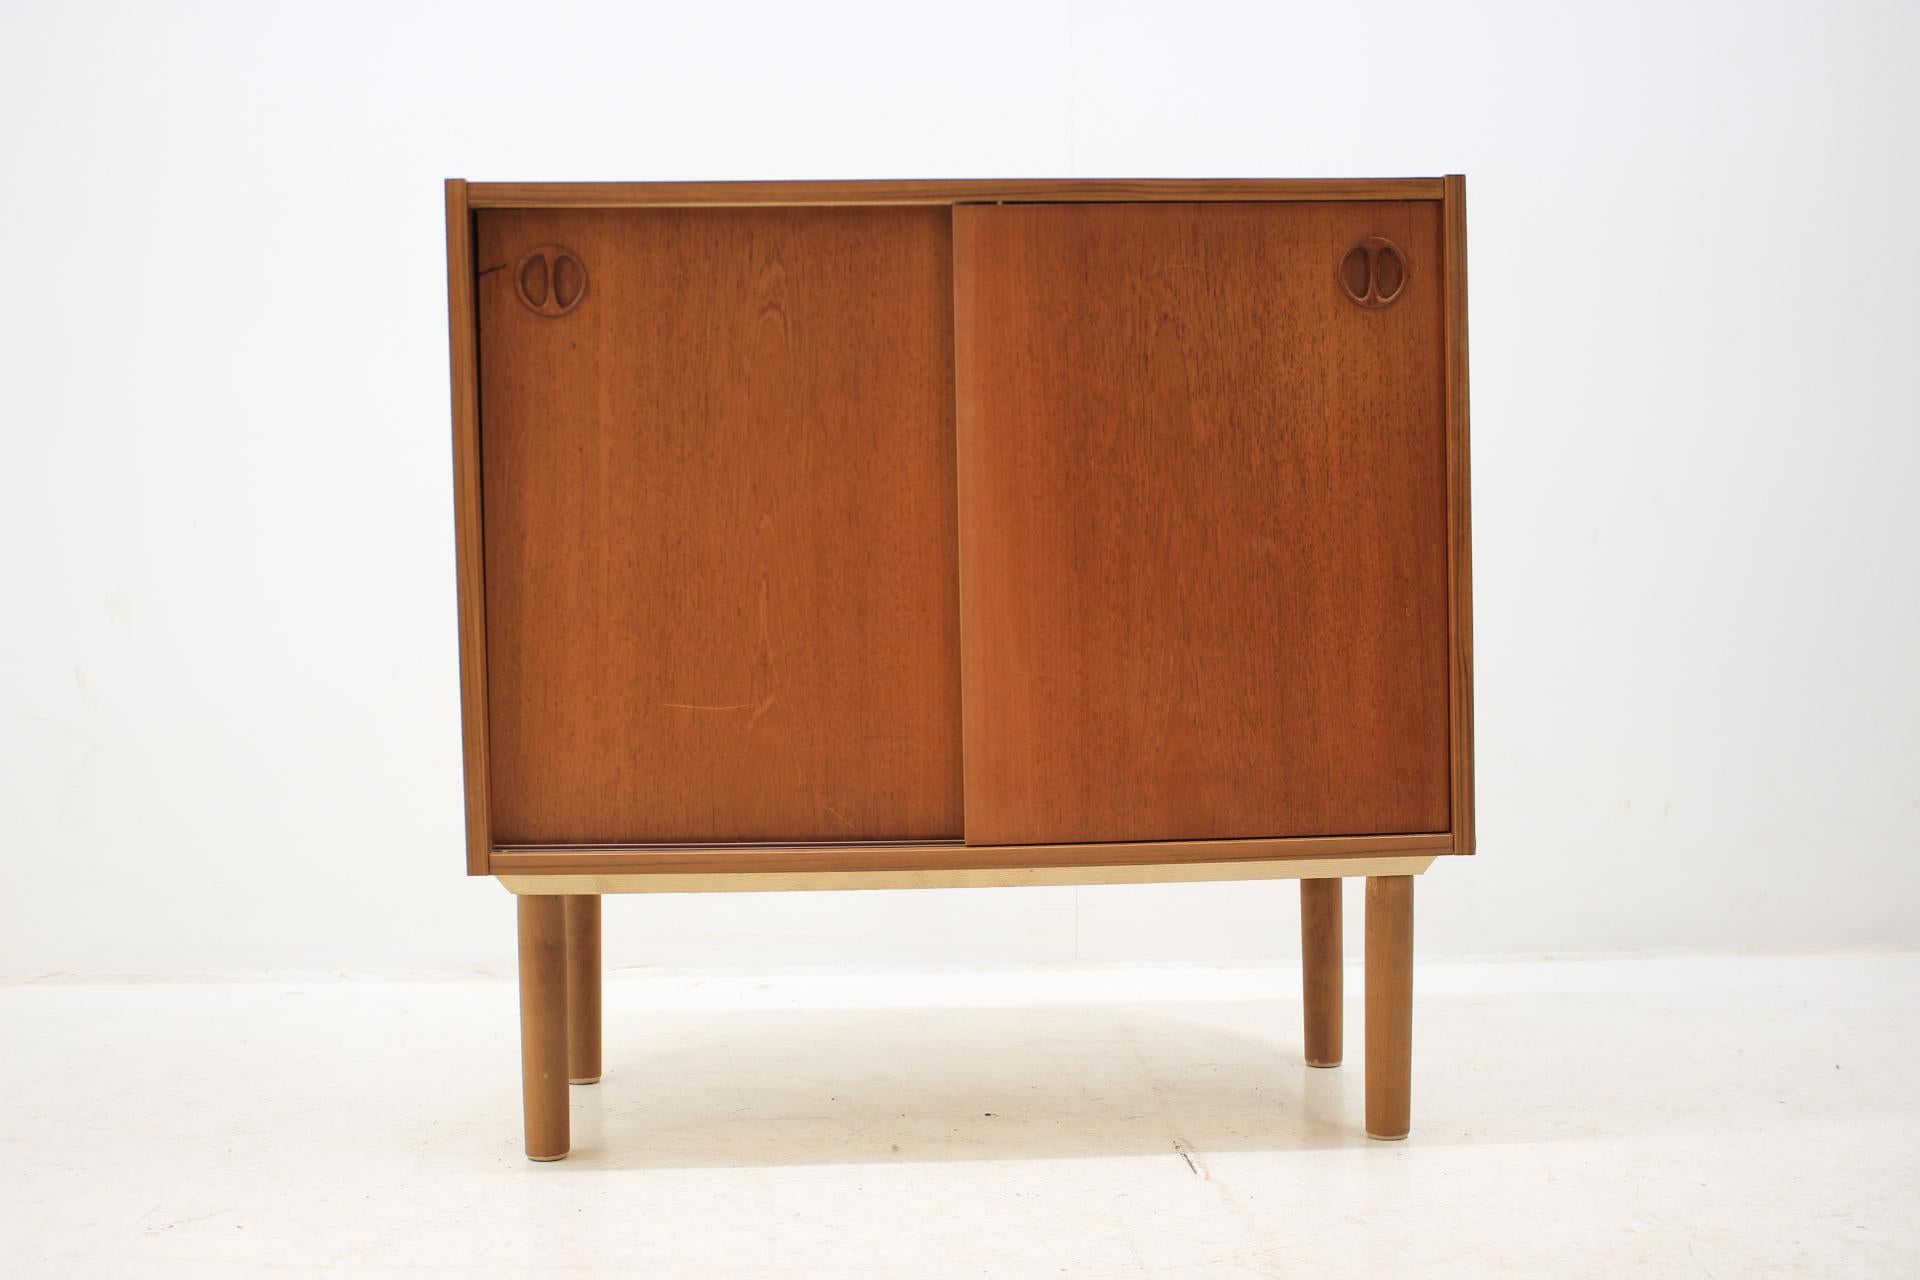 Midcentury Danish cabinet / sideboard, 1960s from Denmark.